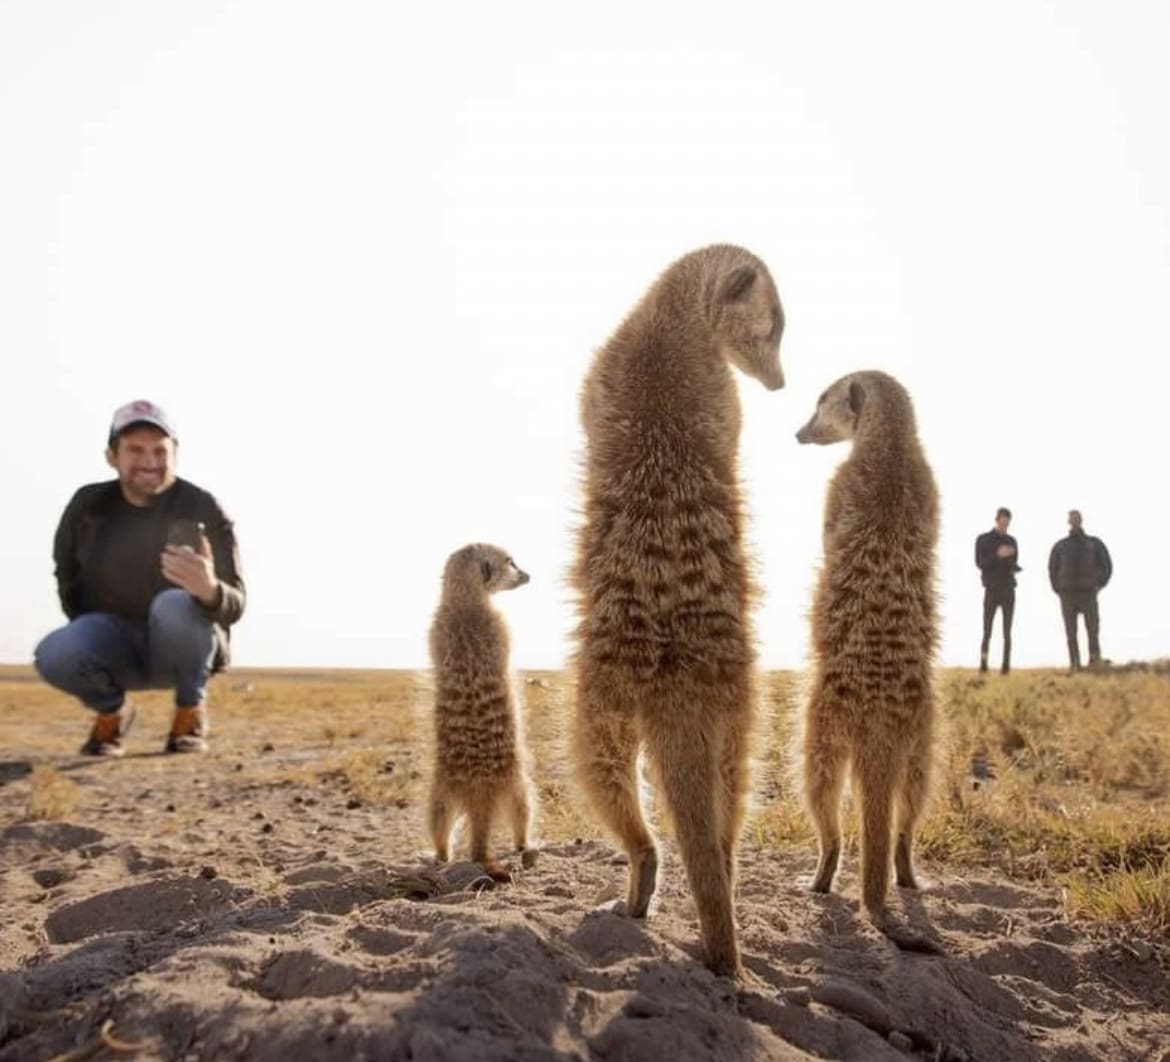 People interacting with Meerkats while on safari in Botswana